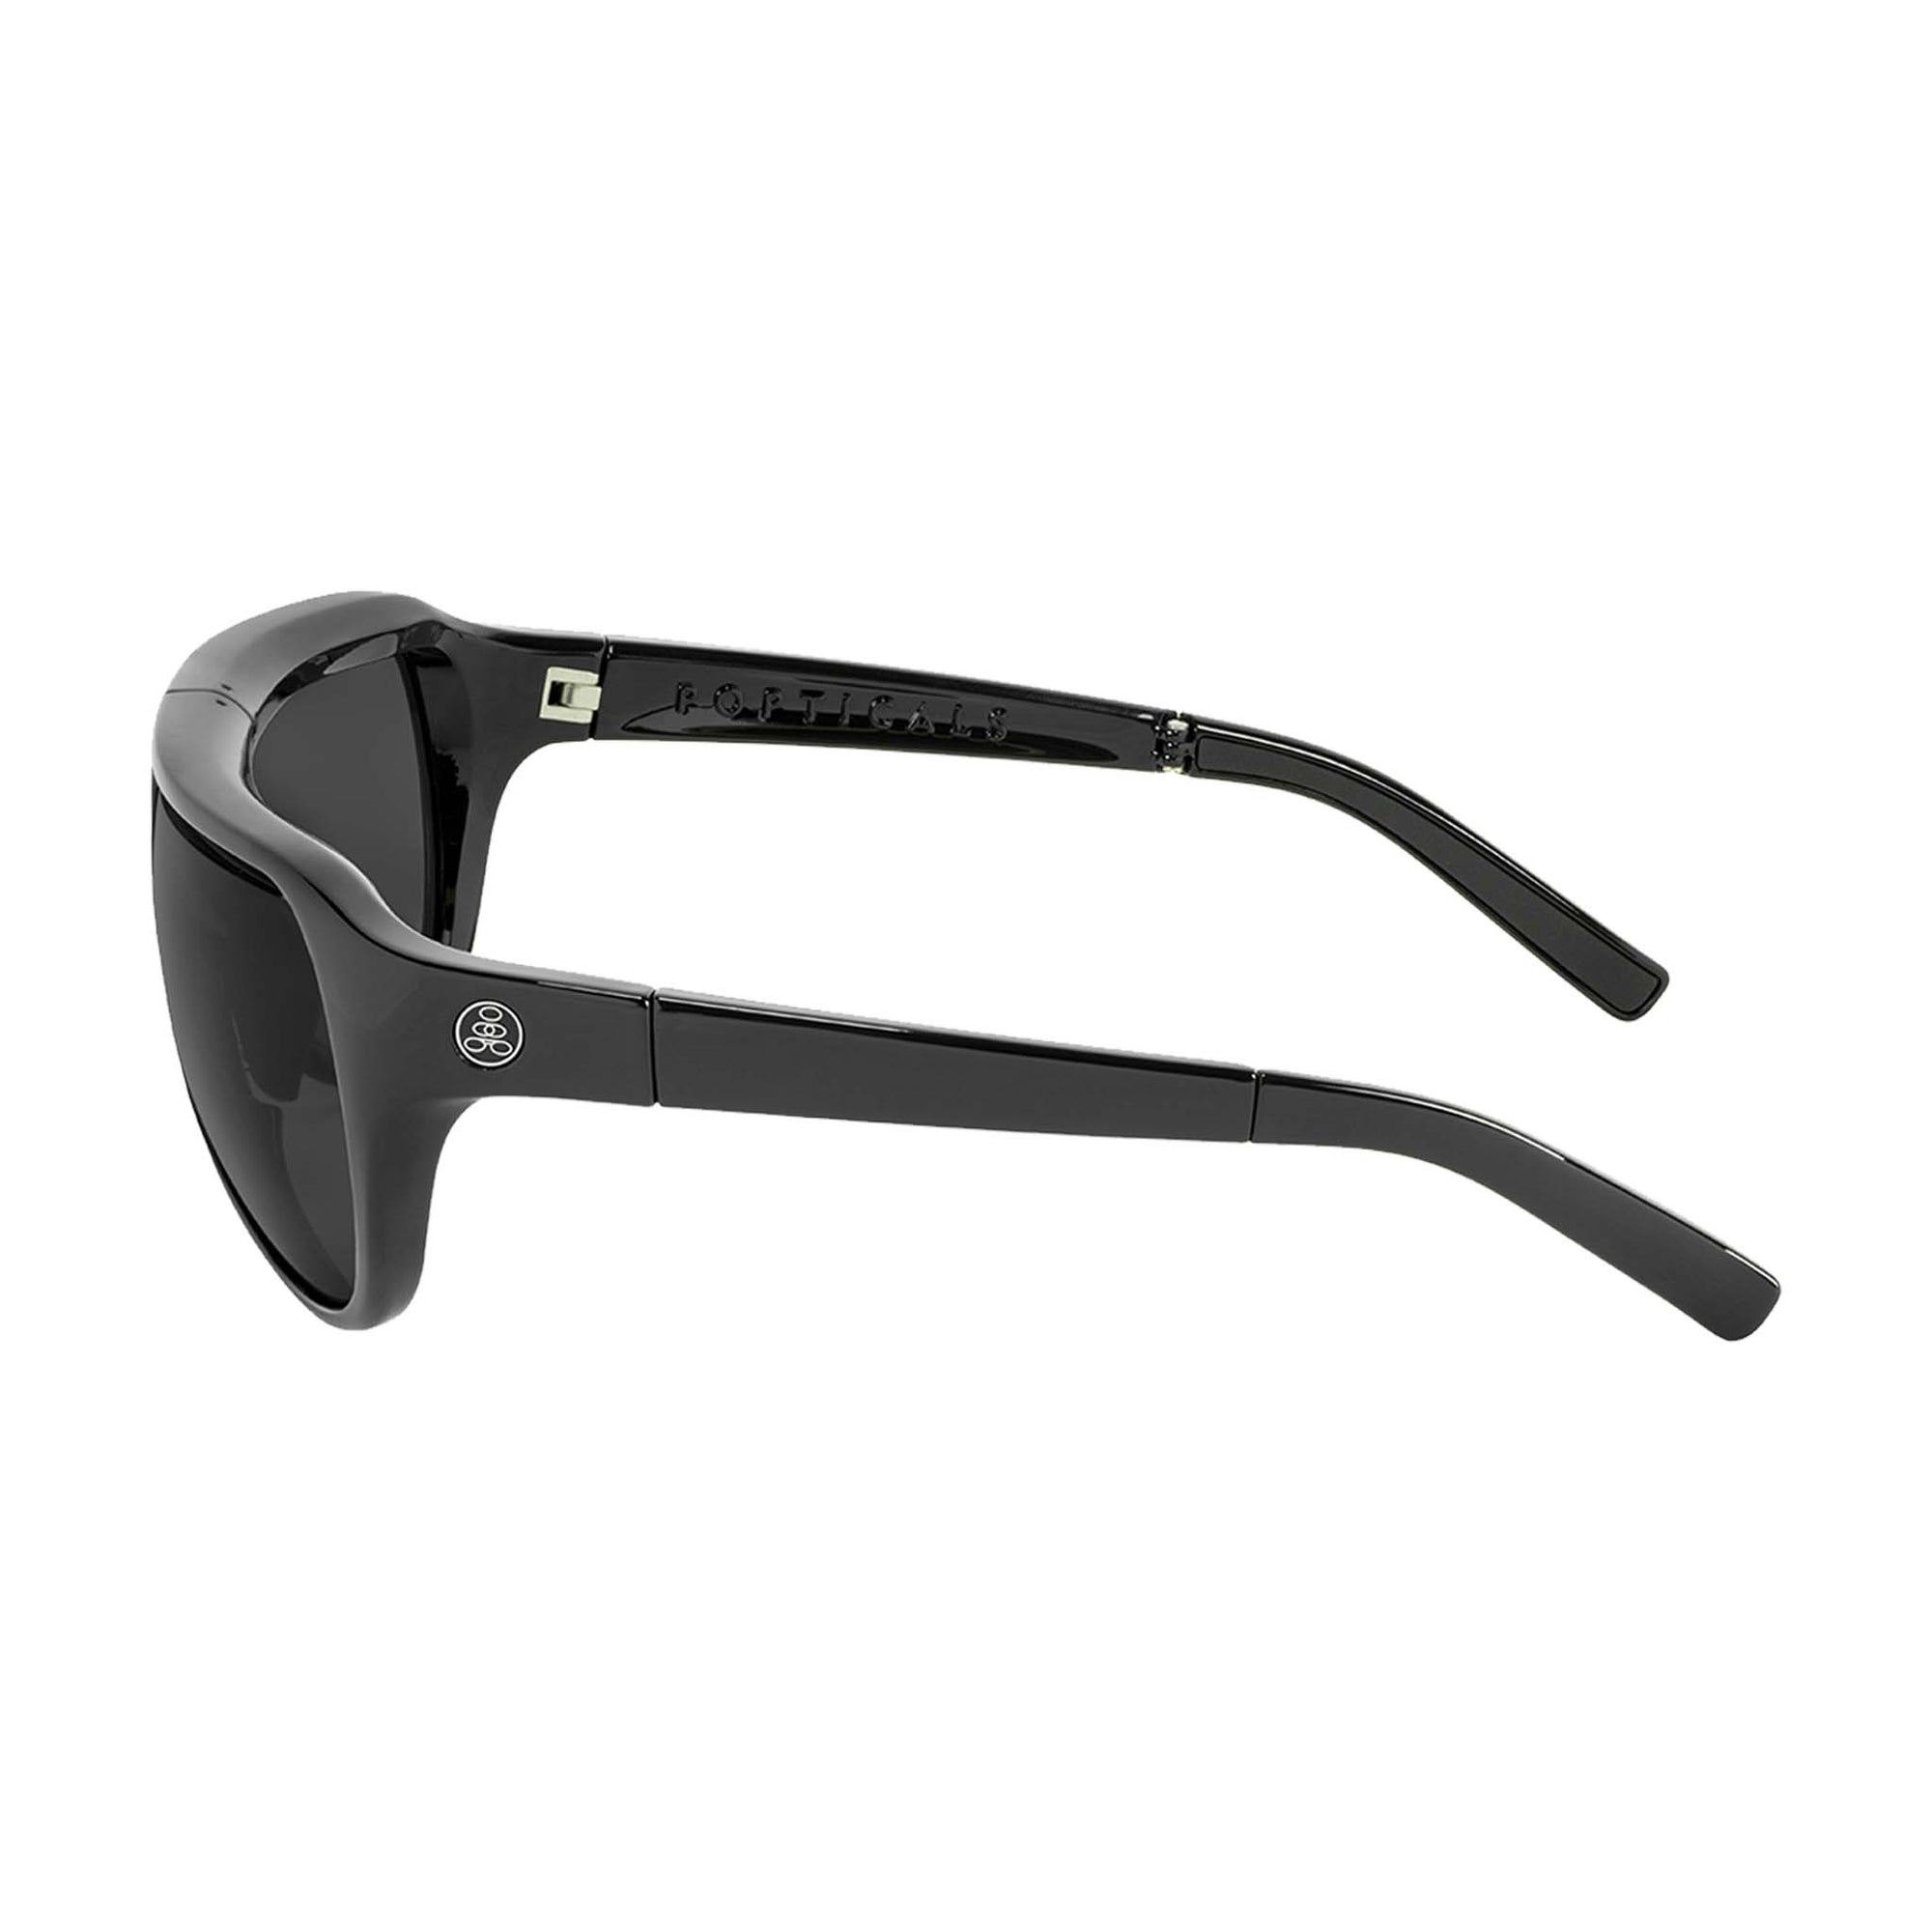 Popticals, Premium Compact Sunglasses, PopAir, 300010-BGGP, Polarized Sunglasses, Gloss Black Frame, Gray Lenses, Side View